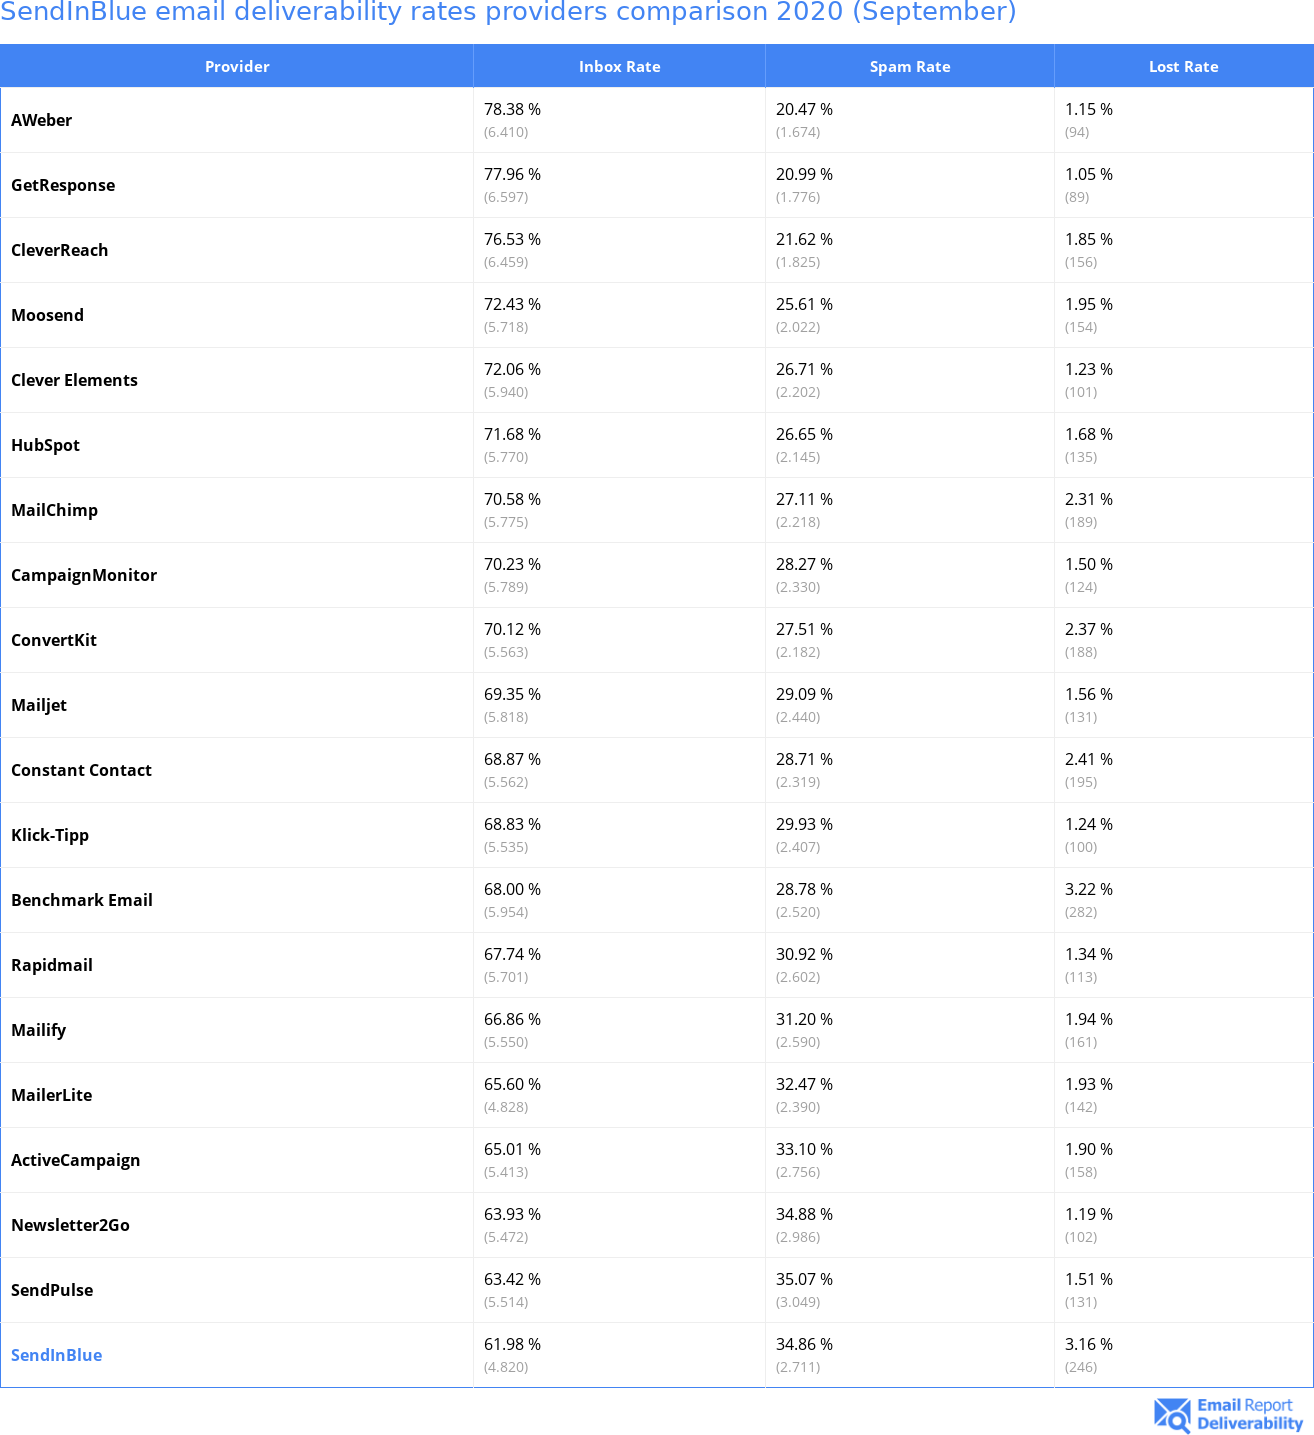 SendInBlue email deliverability rates providers comparison 2020 (September)